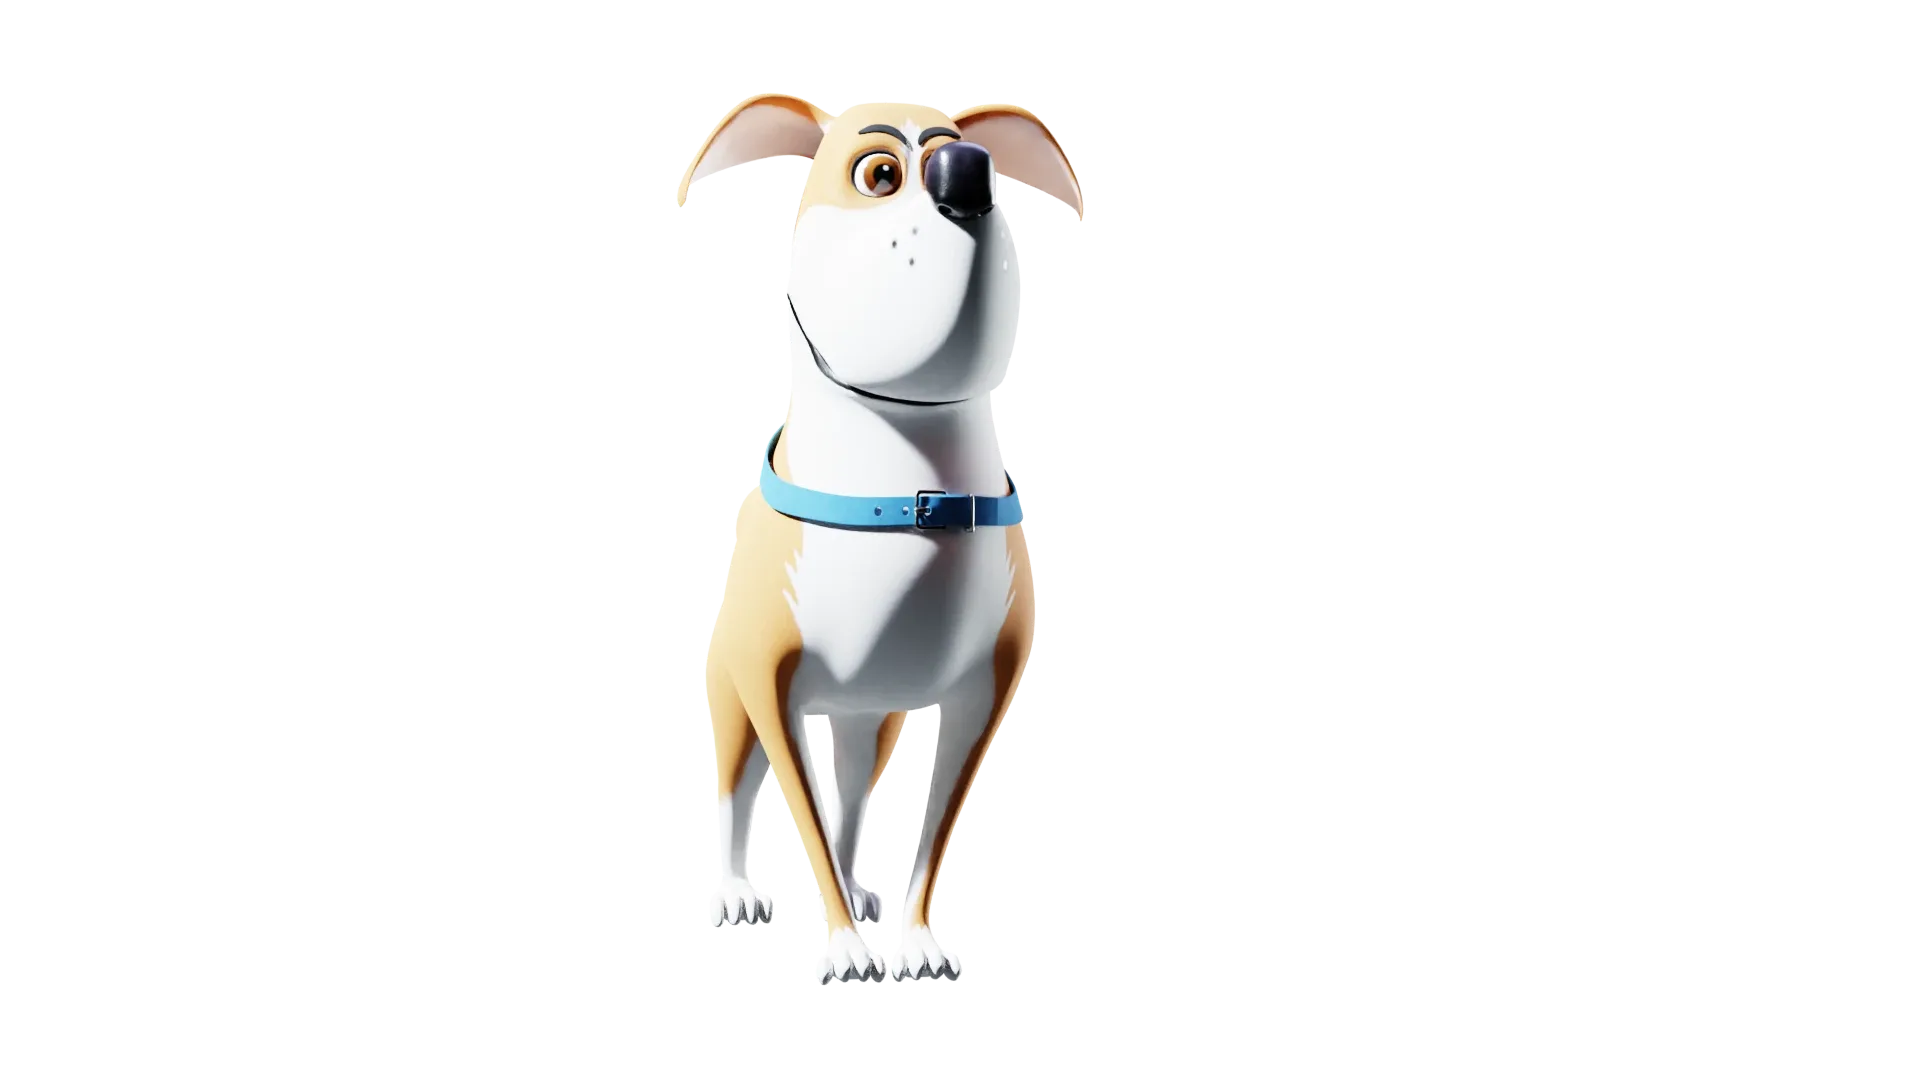 Golden retriever - A cartoon dog rigged animal 3d model for Blender